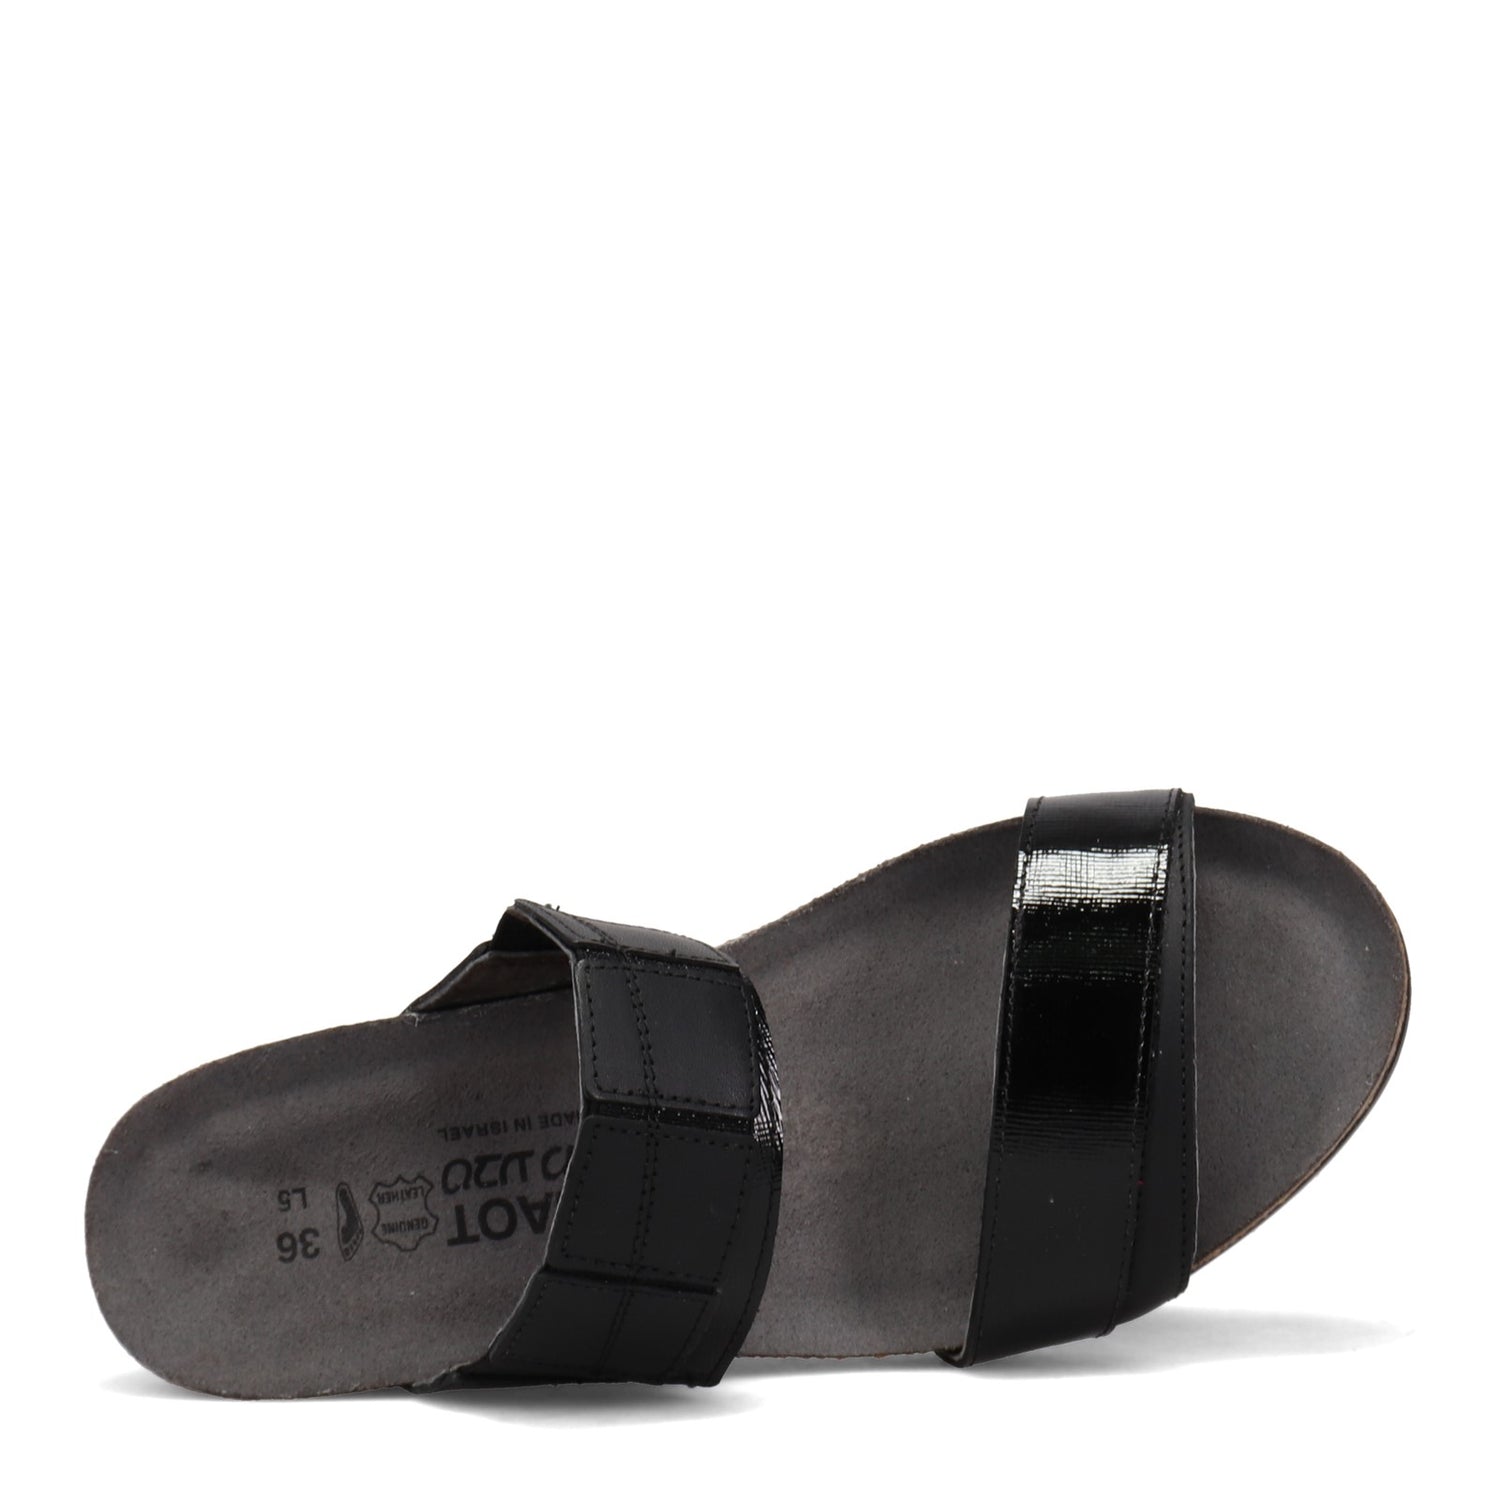 Peltz Shoes  Women's Naot Royalty Sandal BLACK 5051-NYI